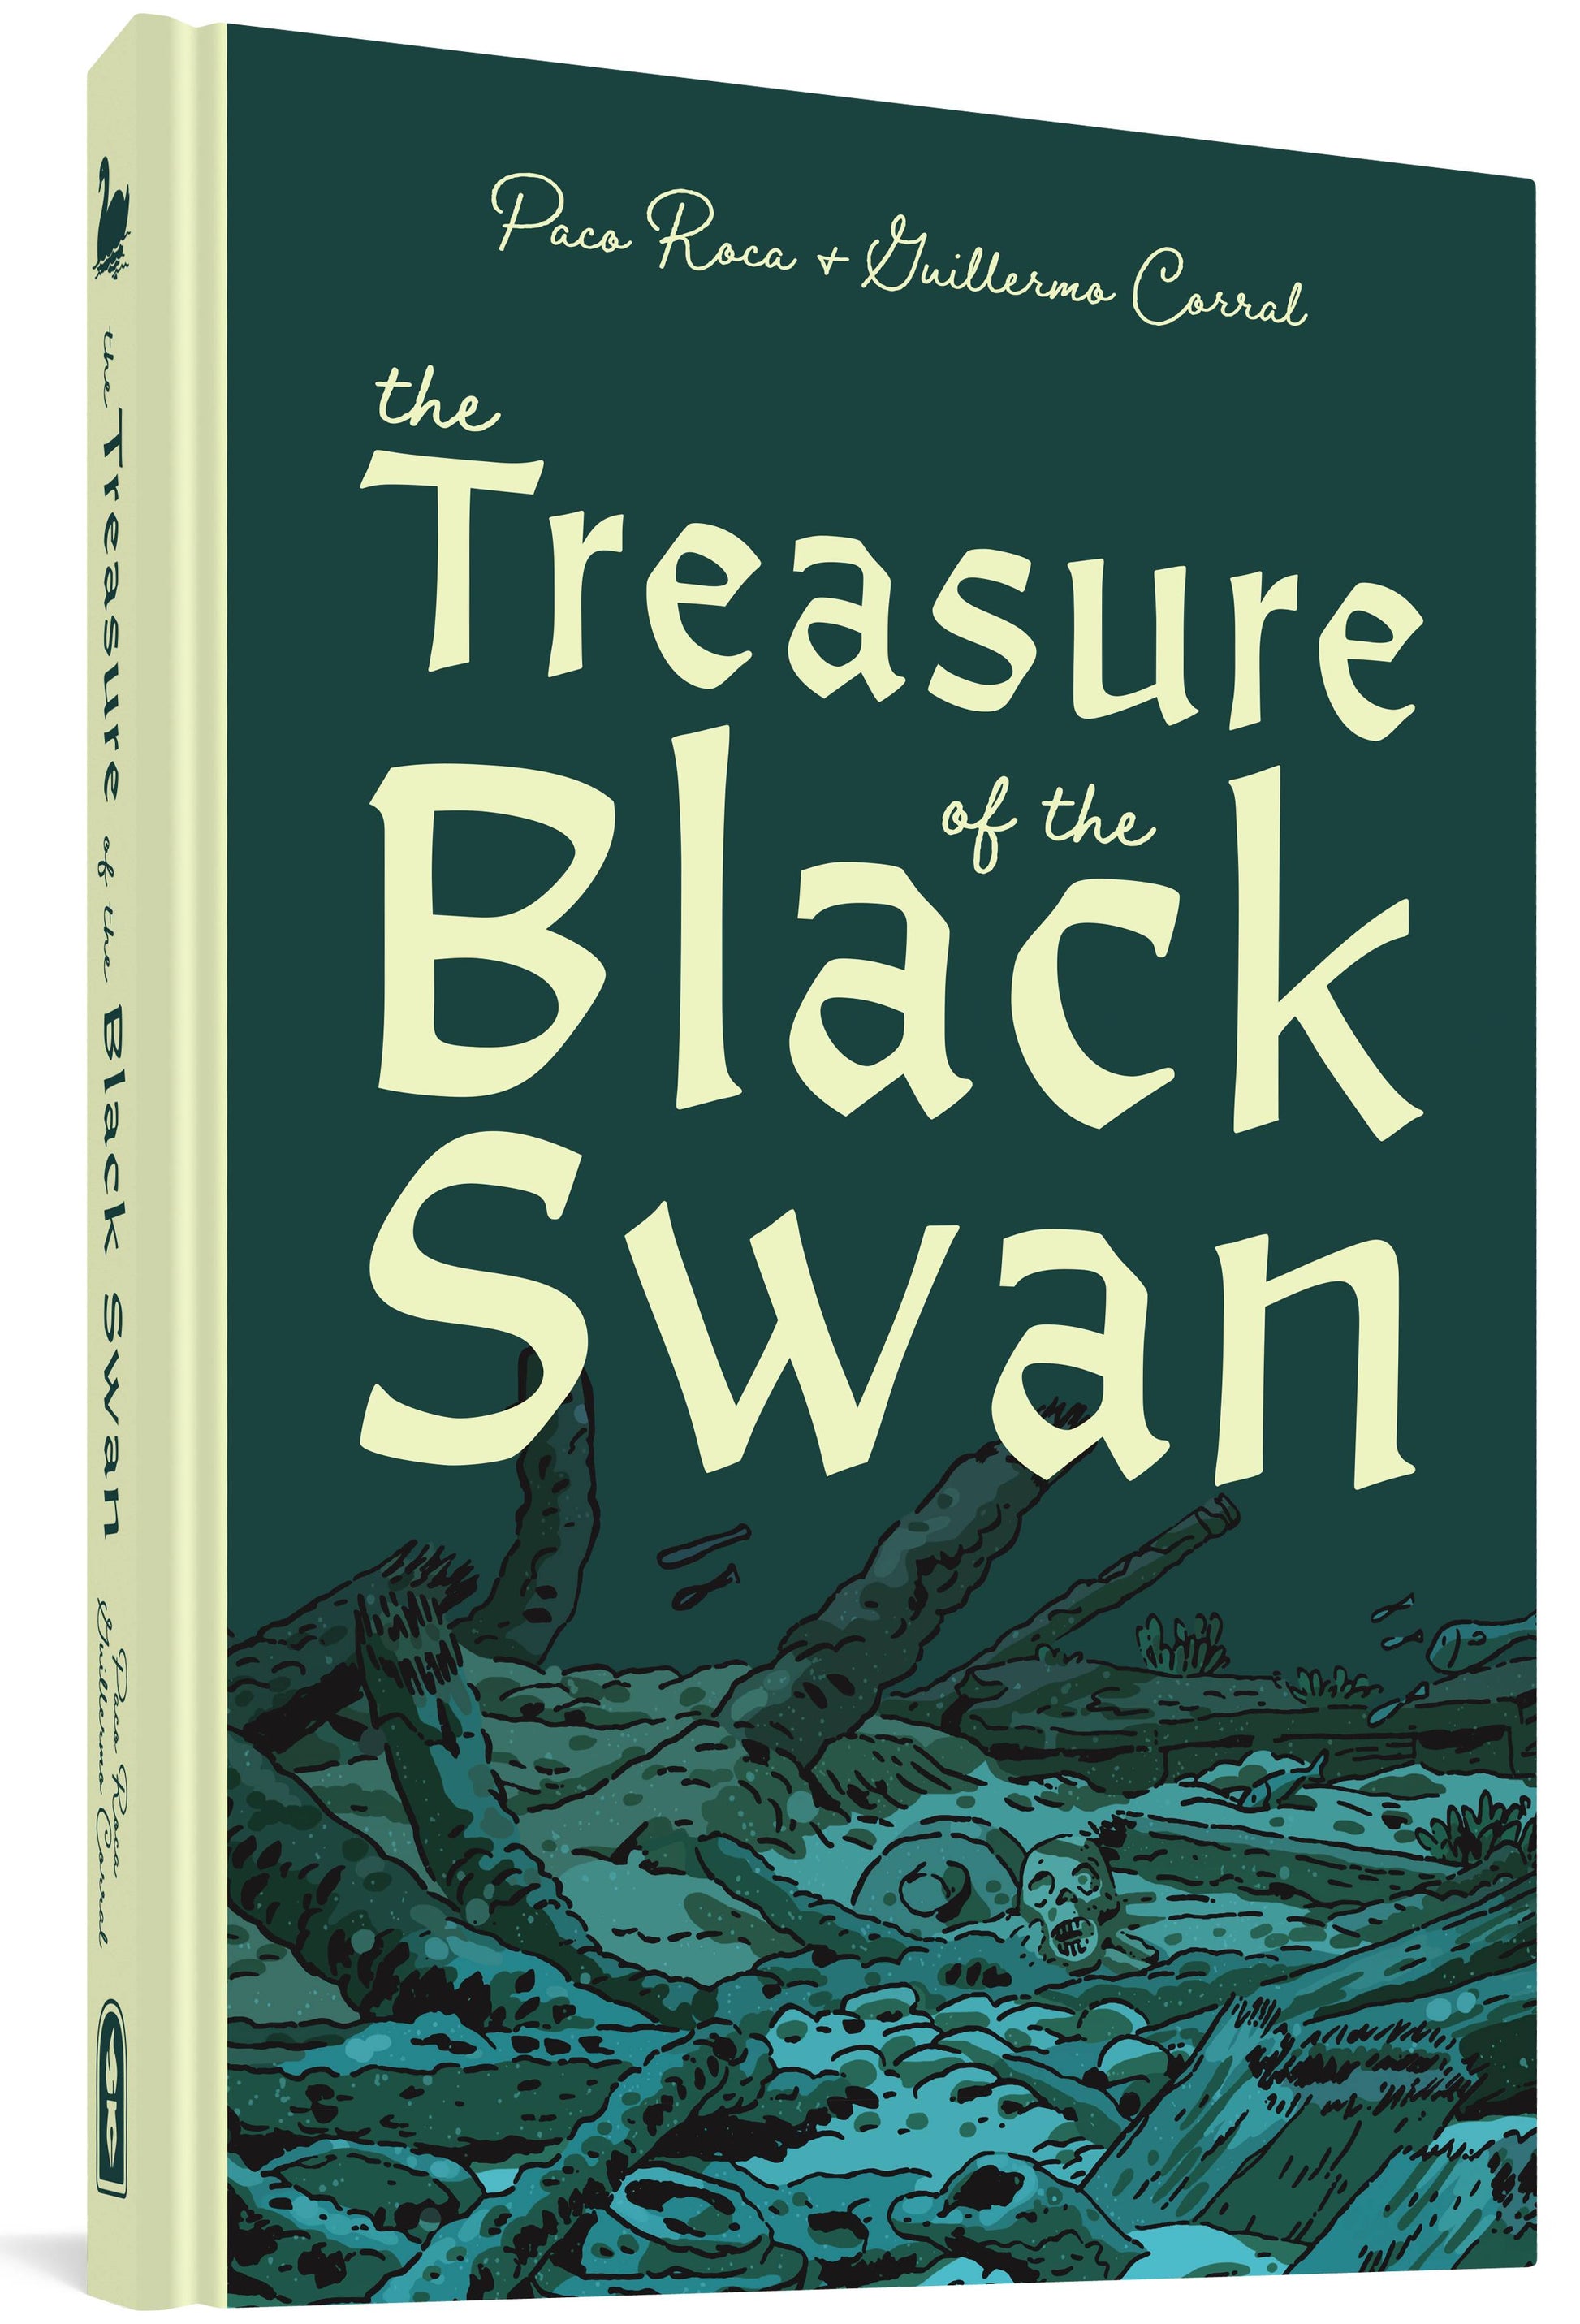 TREASURE OF THE BLACK SWAN HC